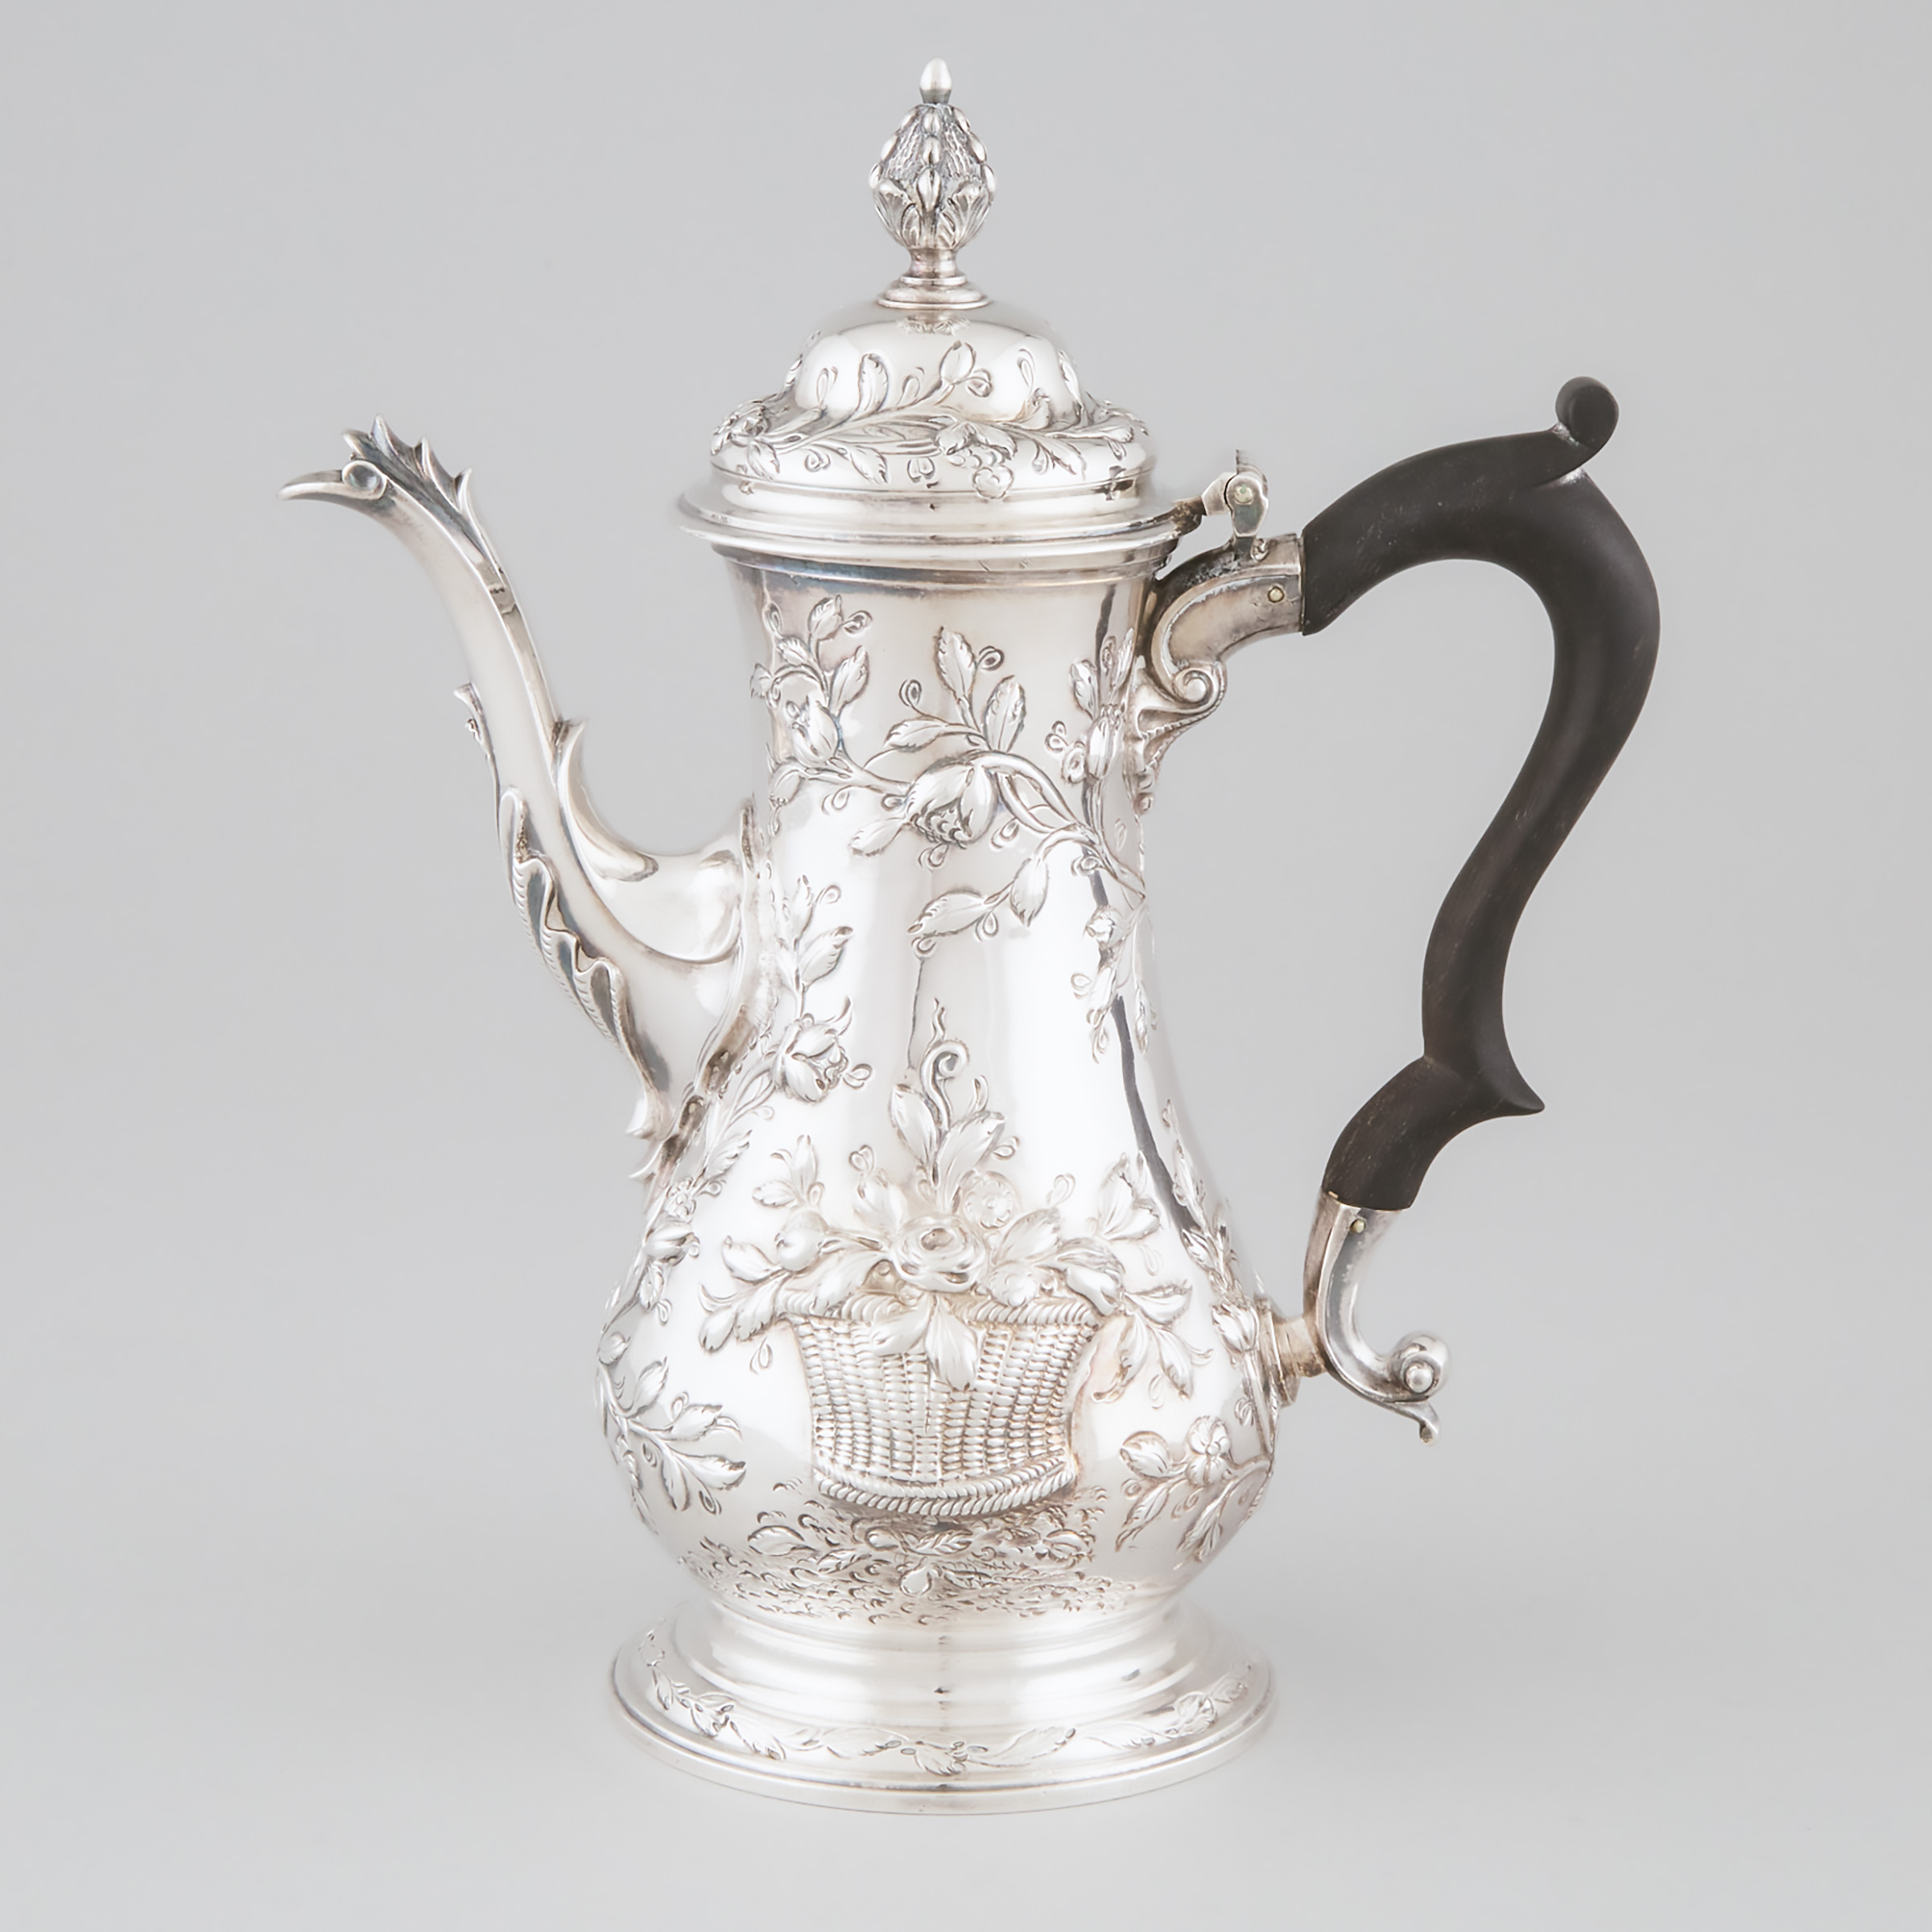 George III Silver Baluster Coffee Pot, Samuel Woods, London, 1767